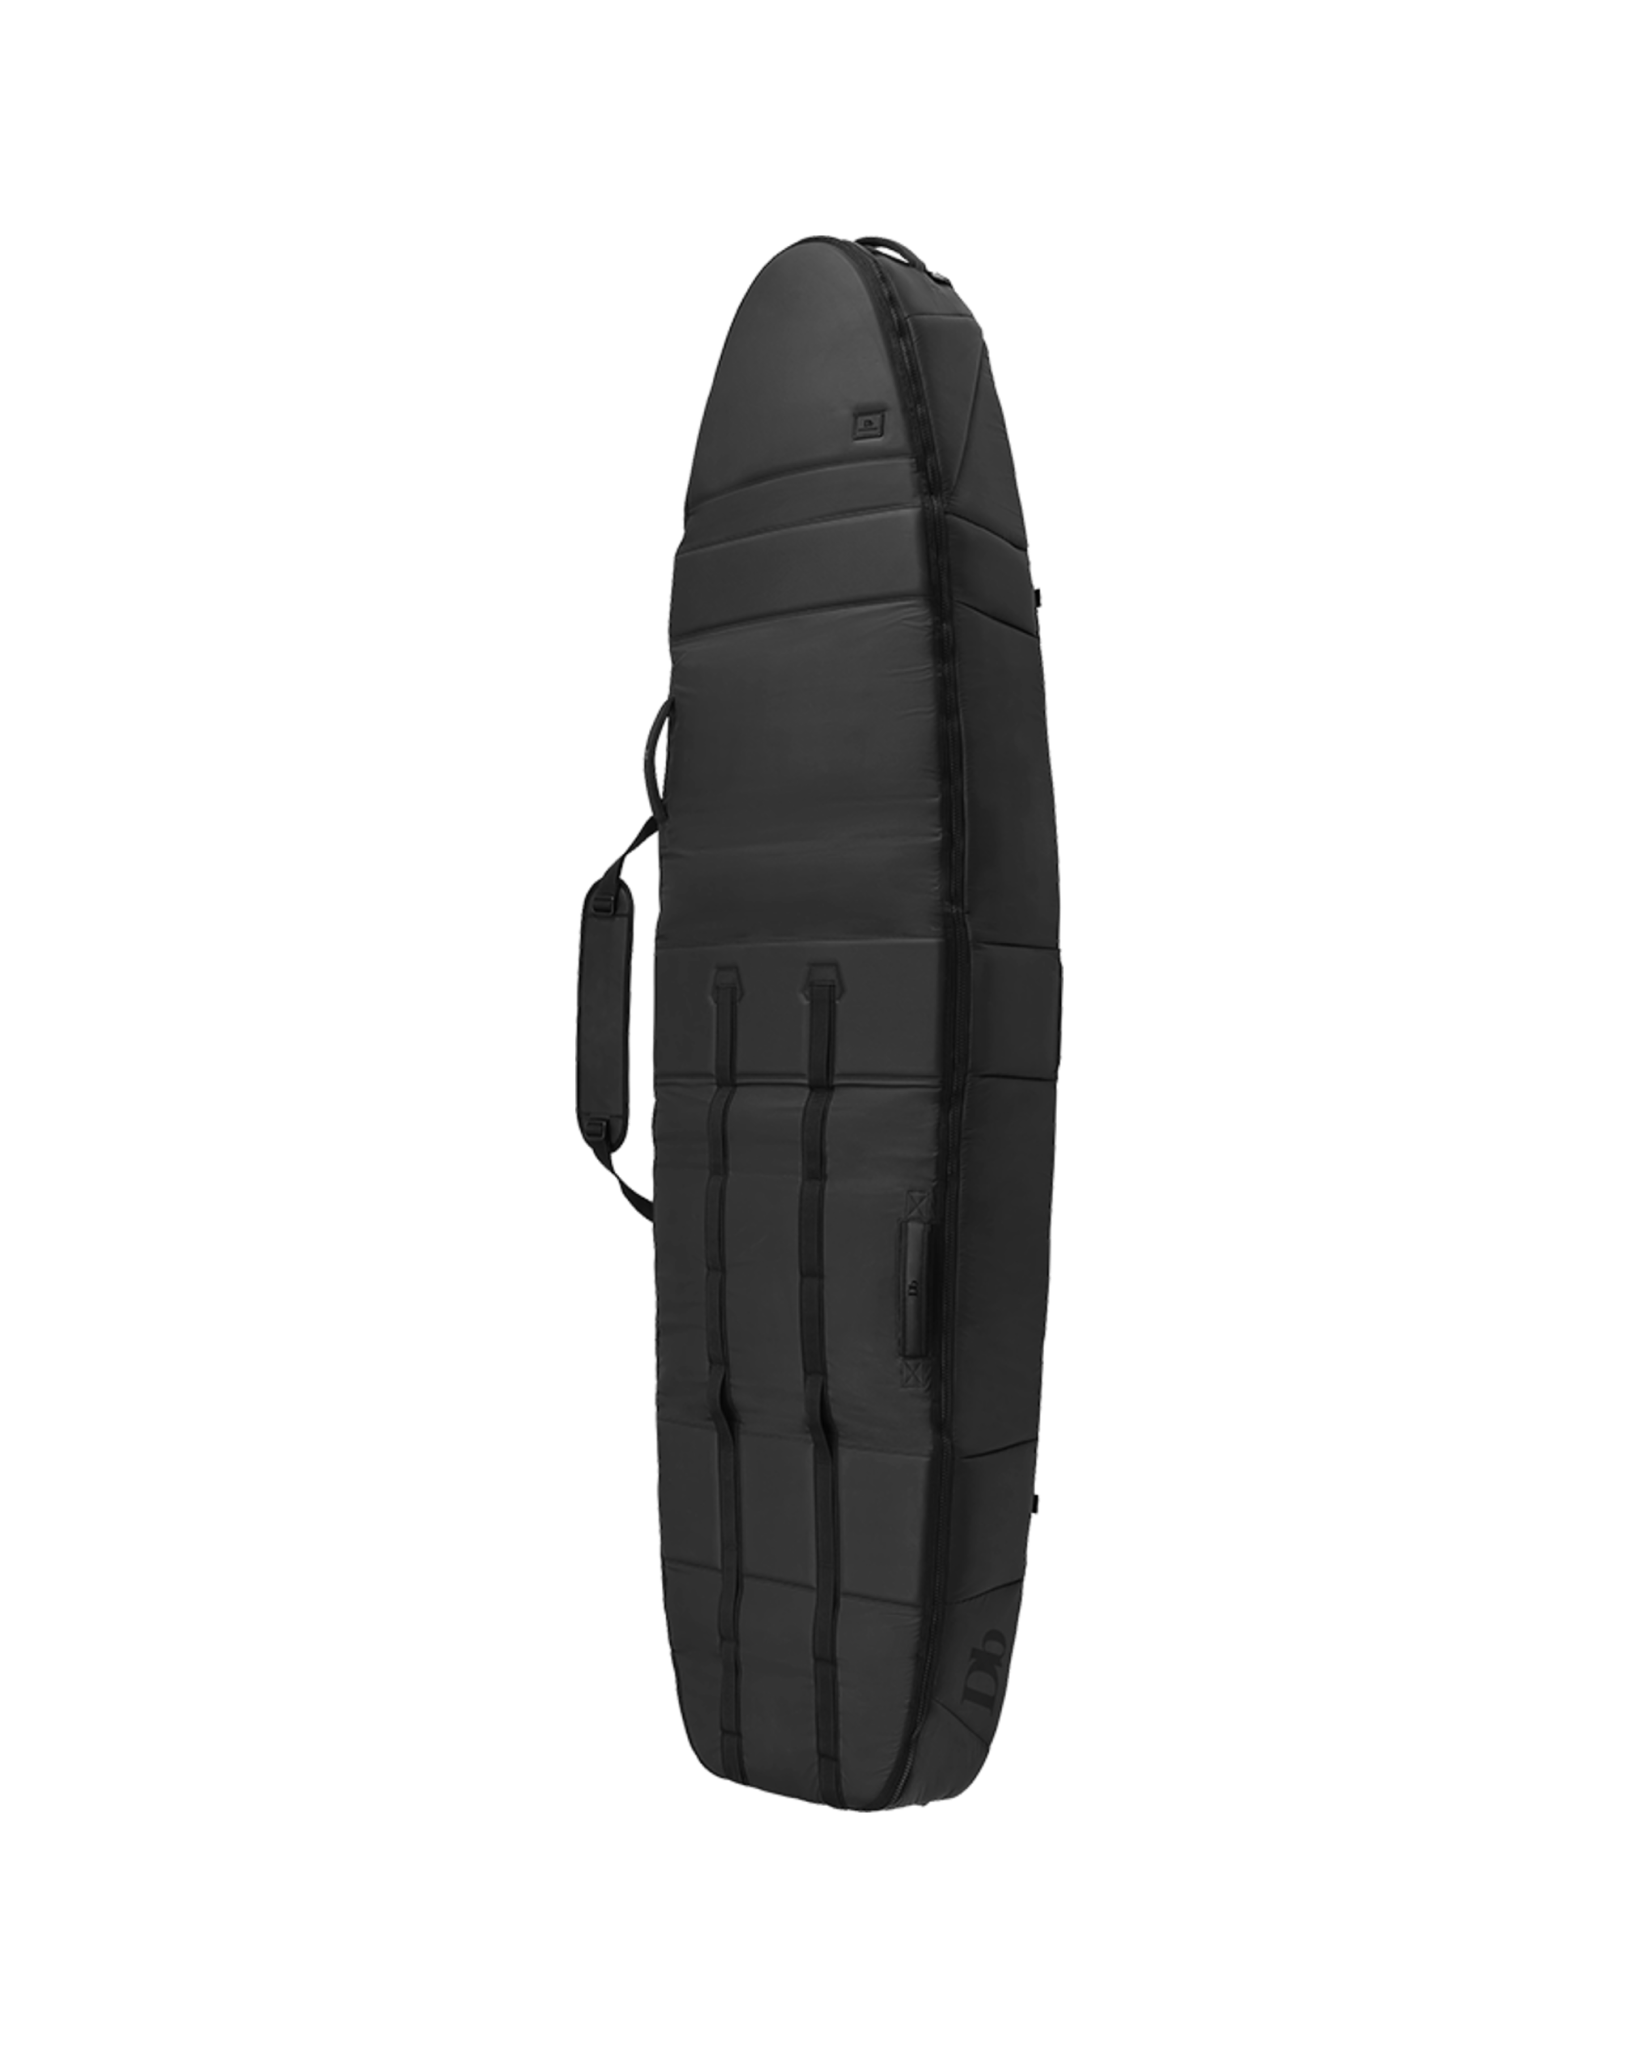 The Djarv 3-4 Surfboard Coffin